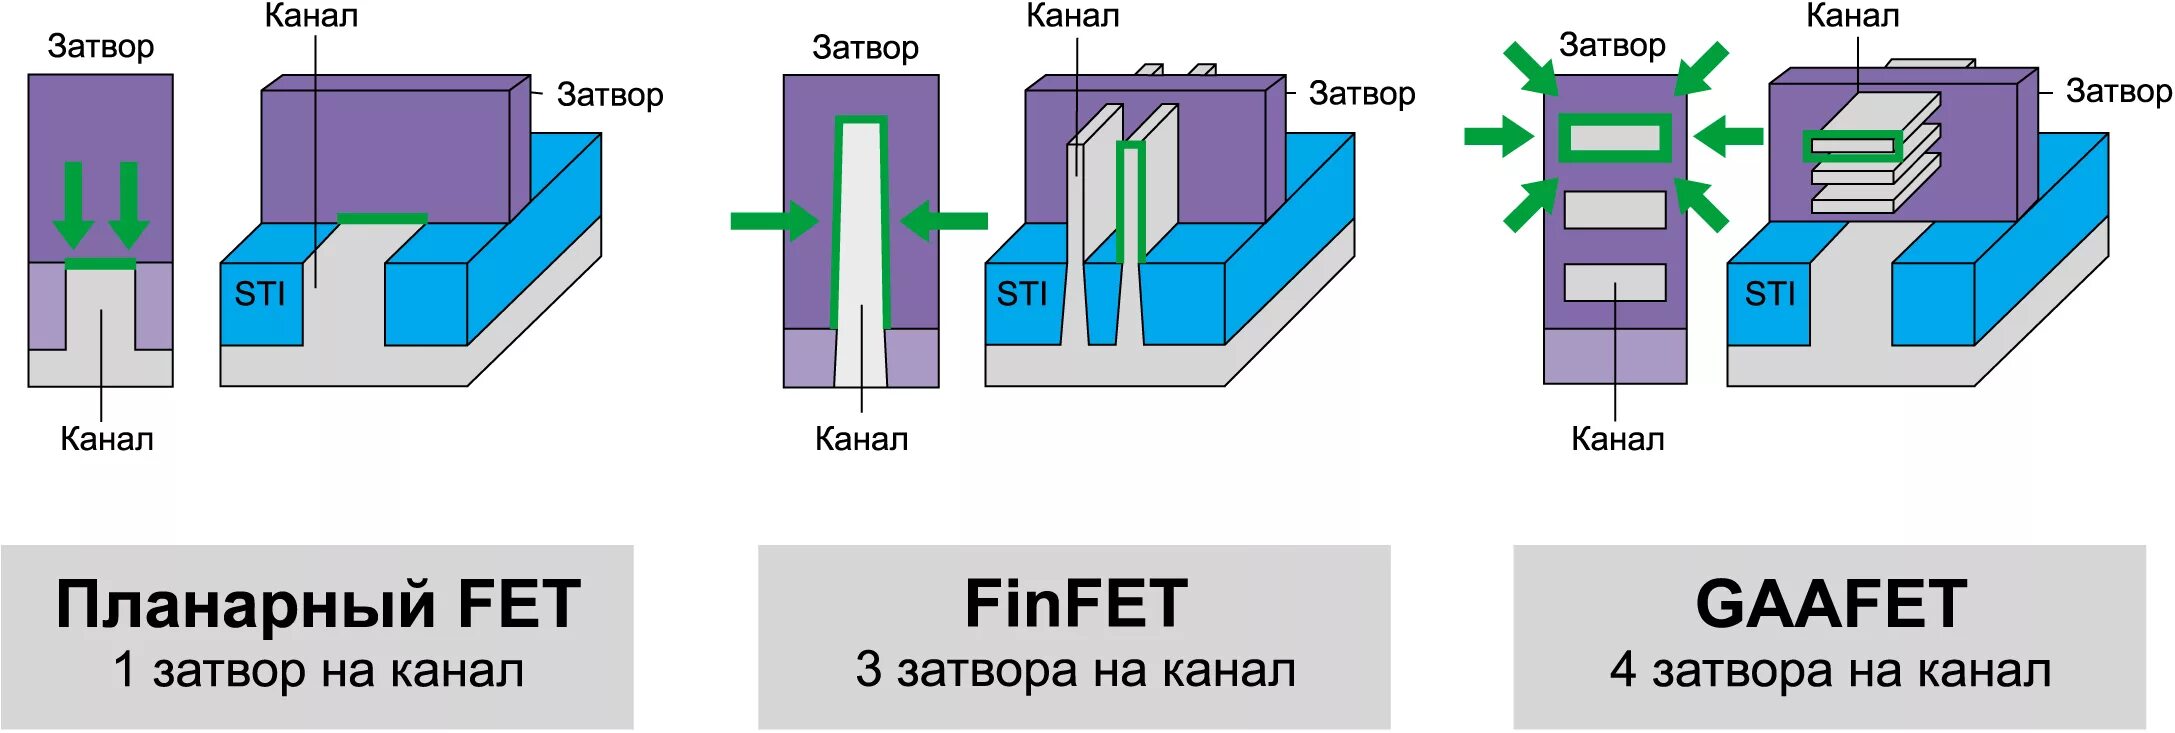 Н м 3. 5 НМ техпроцесс процессоры. Транзистор 7 нанометров. Транзистор 5 НМ. FINFET транзистор.